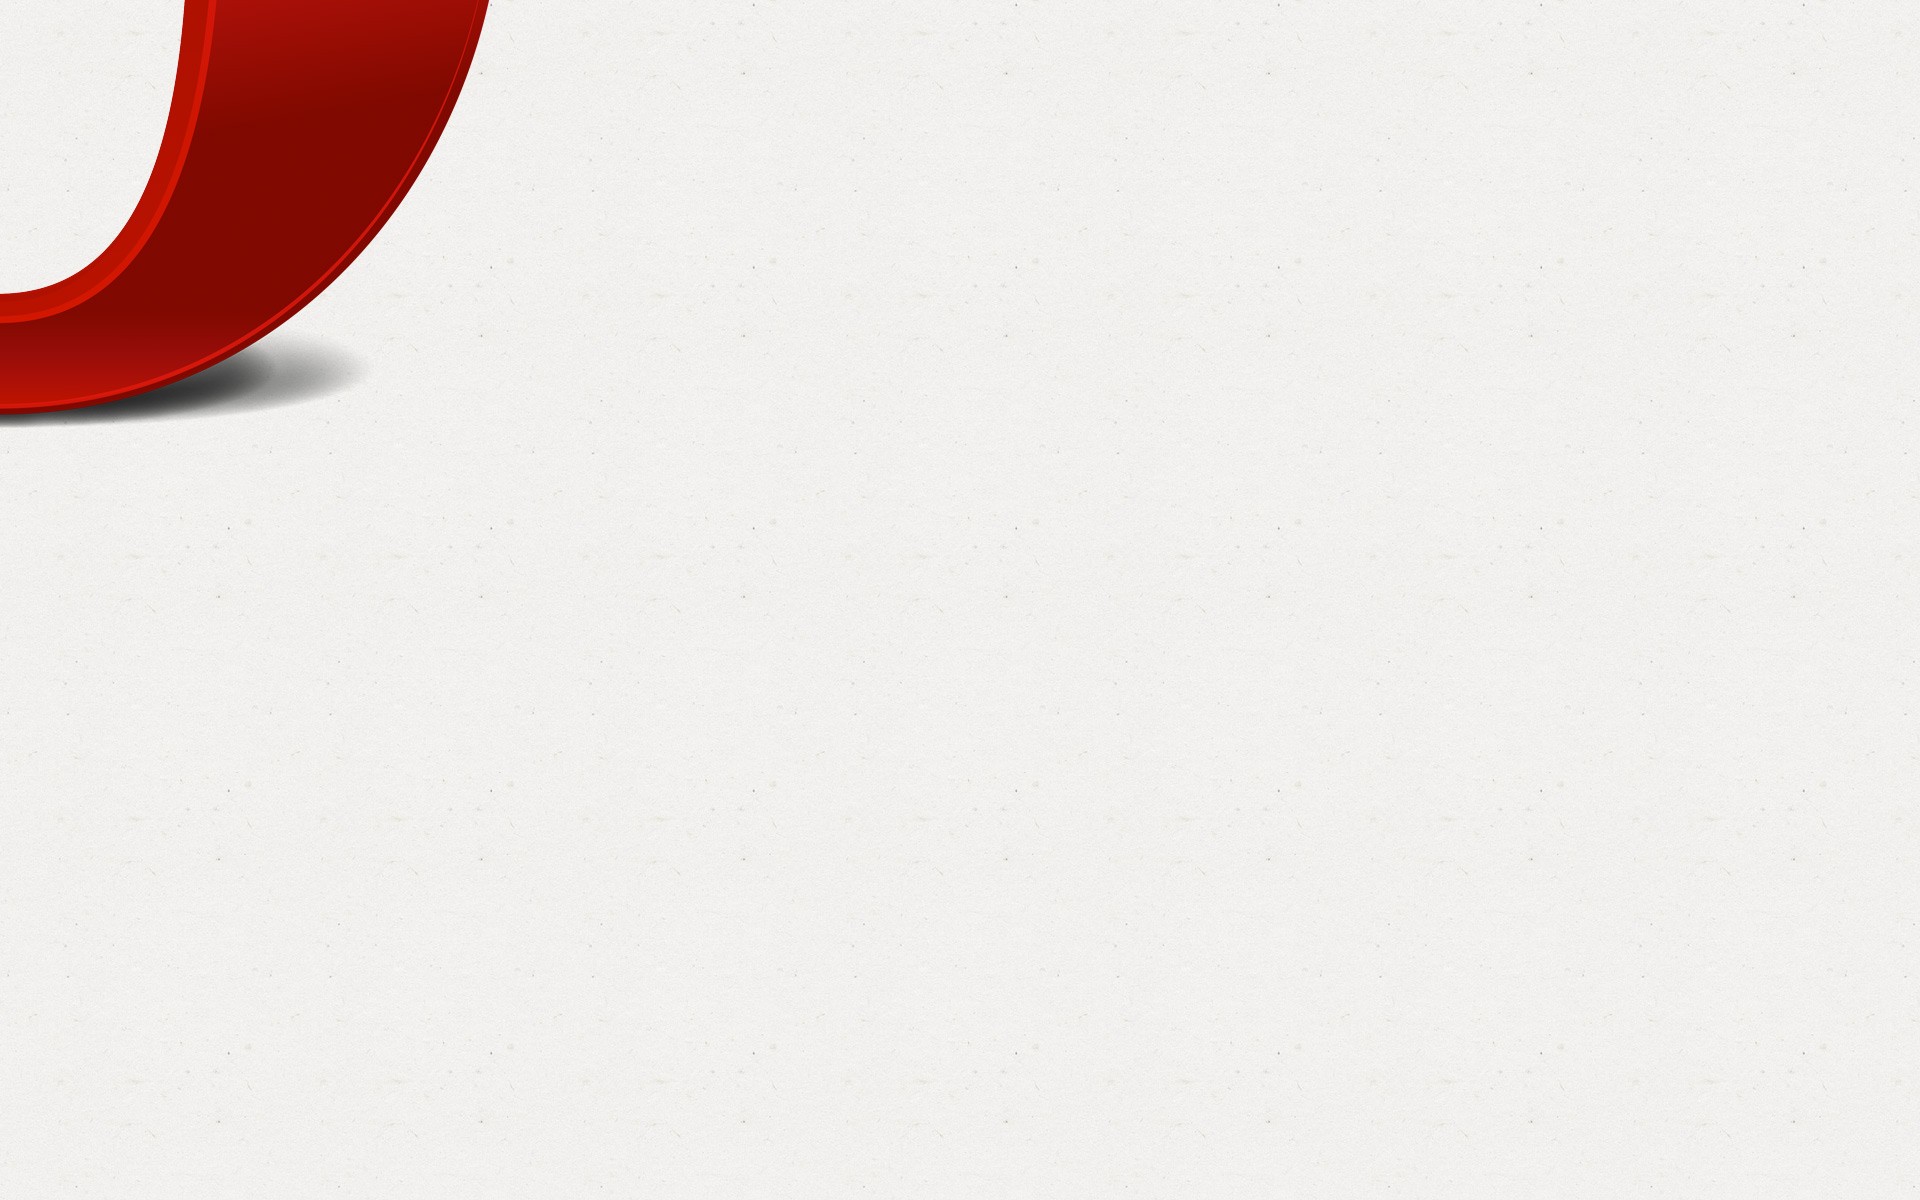 General 1920x1200 minimalism white background red background software Opera browser digital art simple background